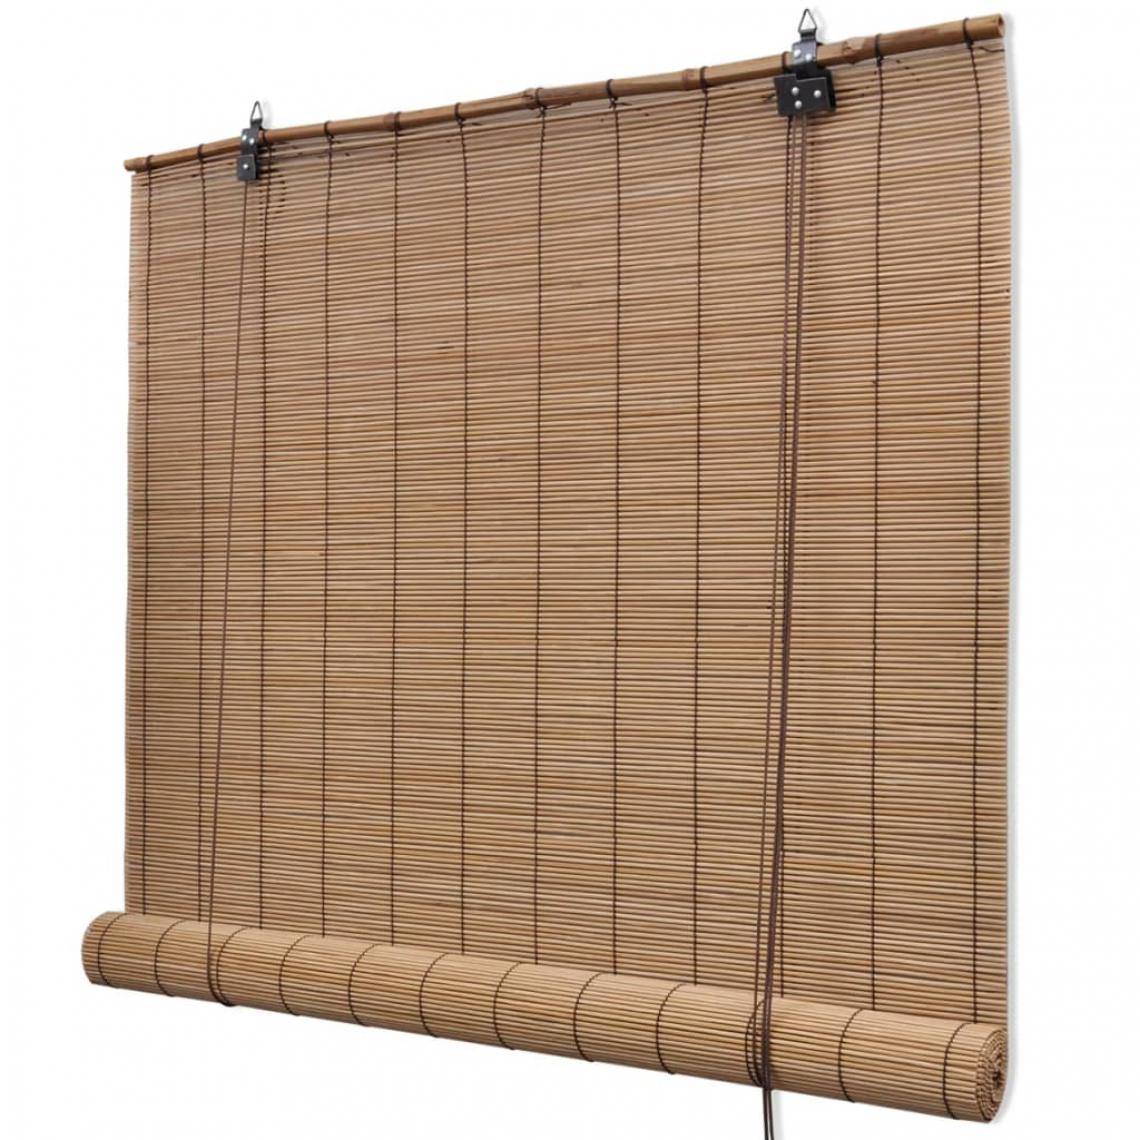 Chunhelife - Store roulant en bambou 140 x 220 cm Marron - Store banne